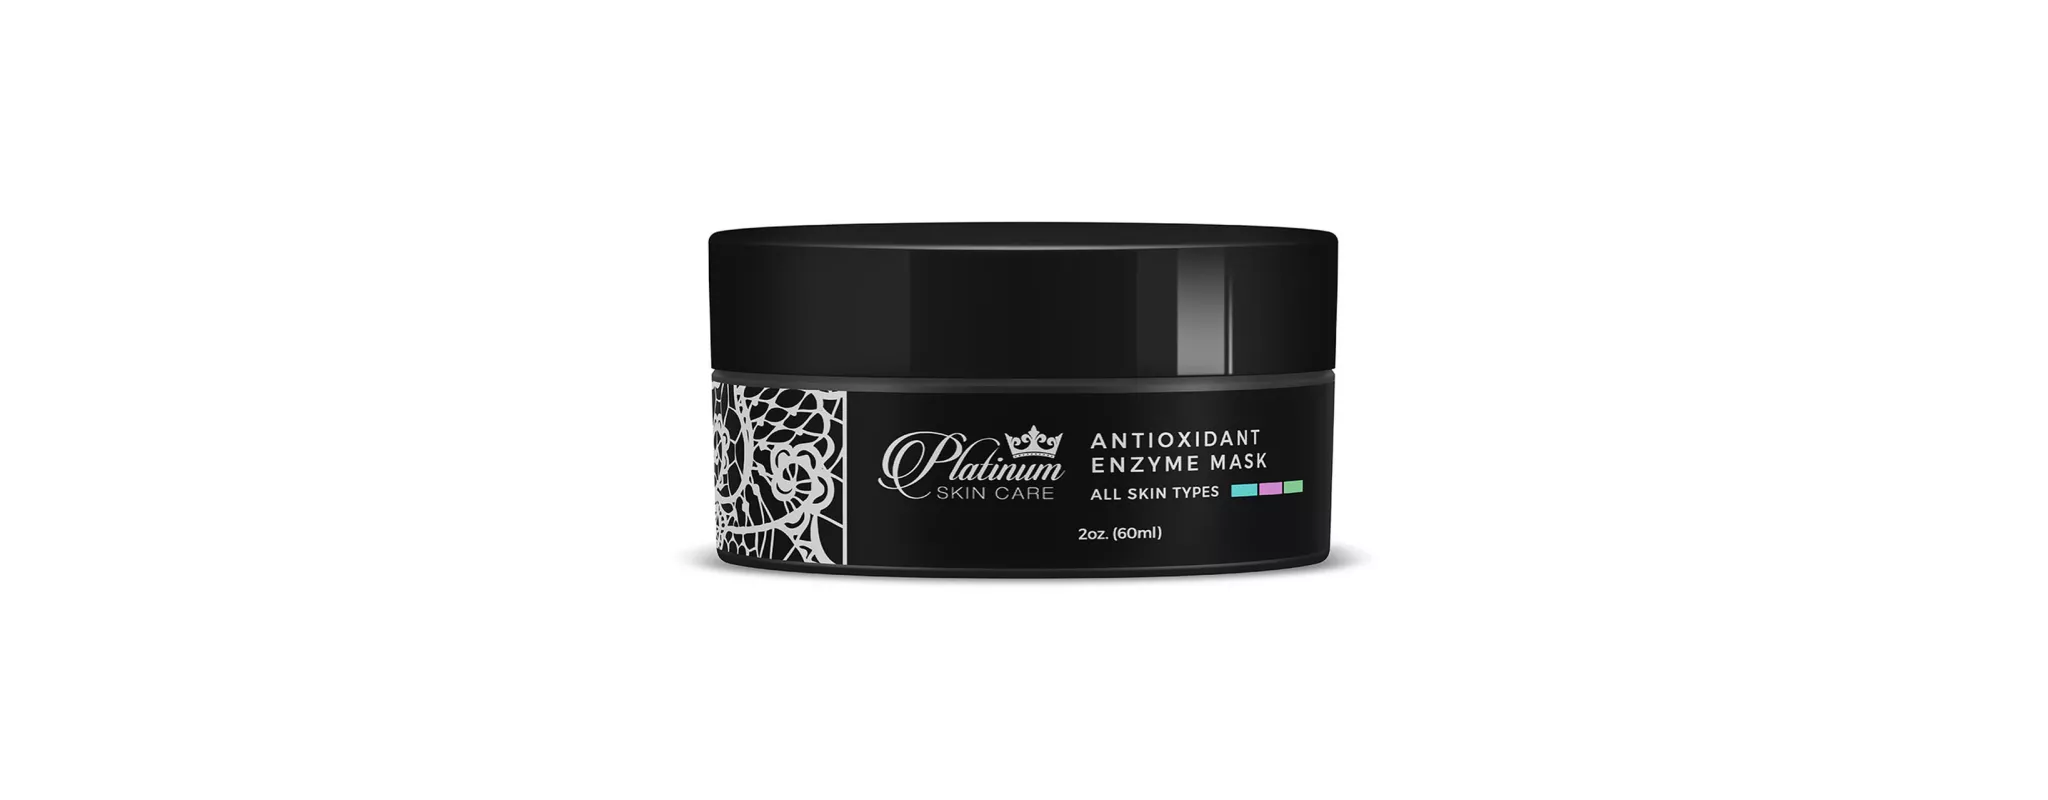 Antioxidant Enzyme Mask 60ml